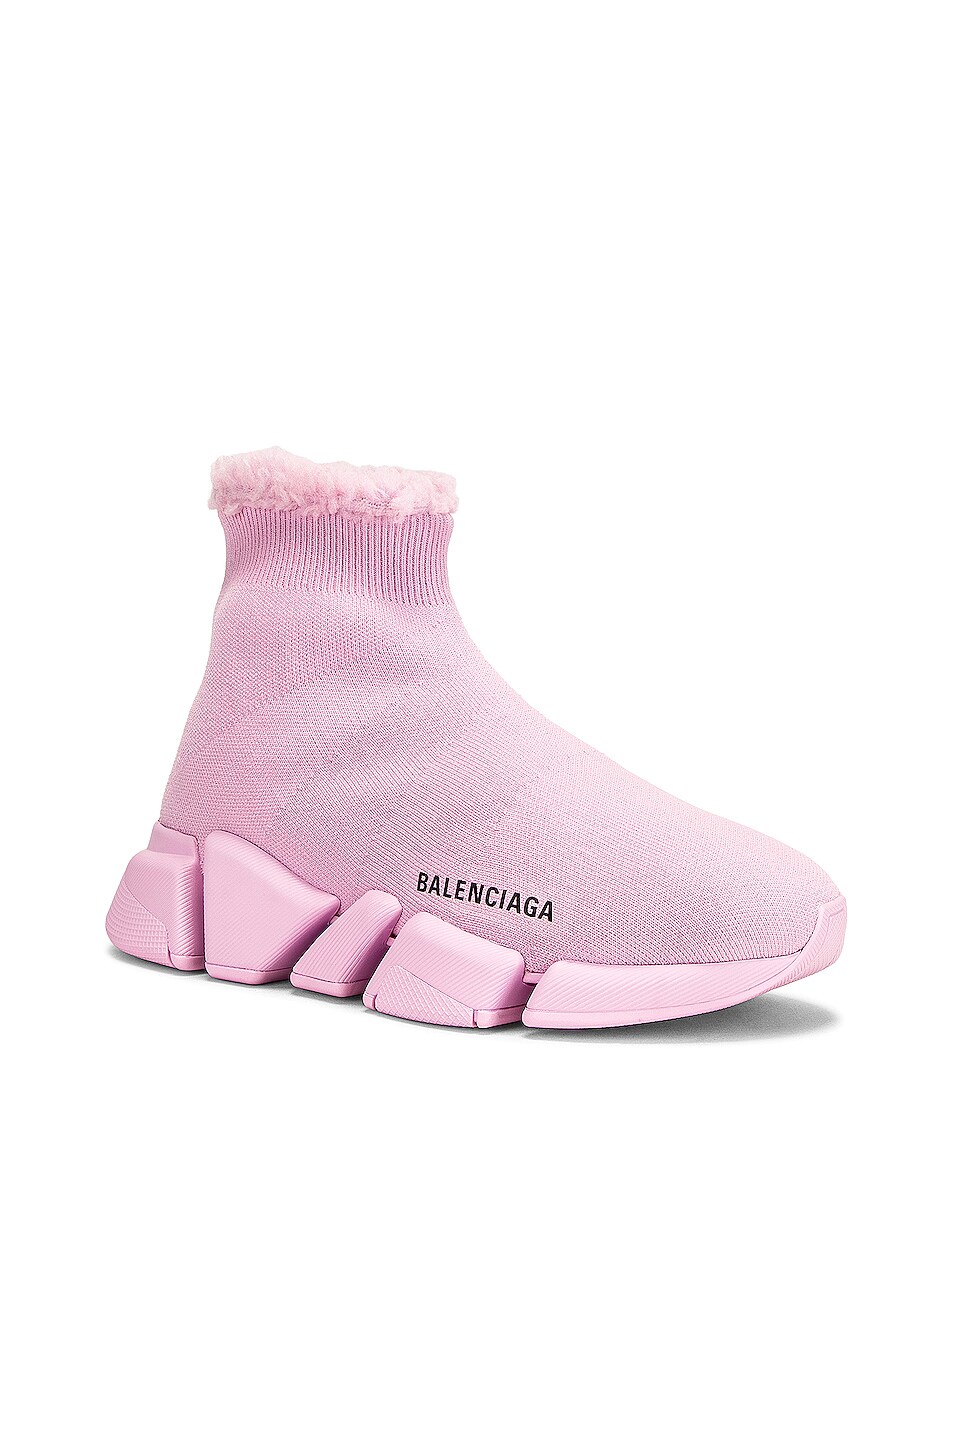 Balenciaga Speed 2.0 LT Sneakers in Soft Pink | FWRD